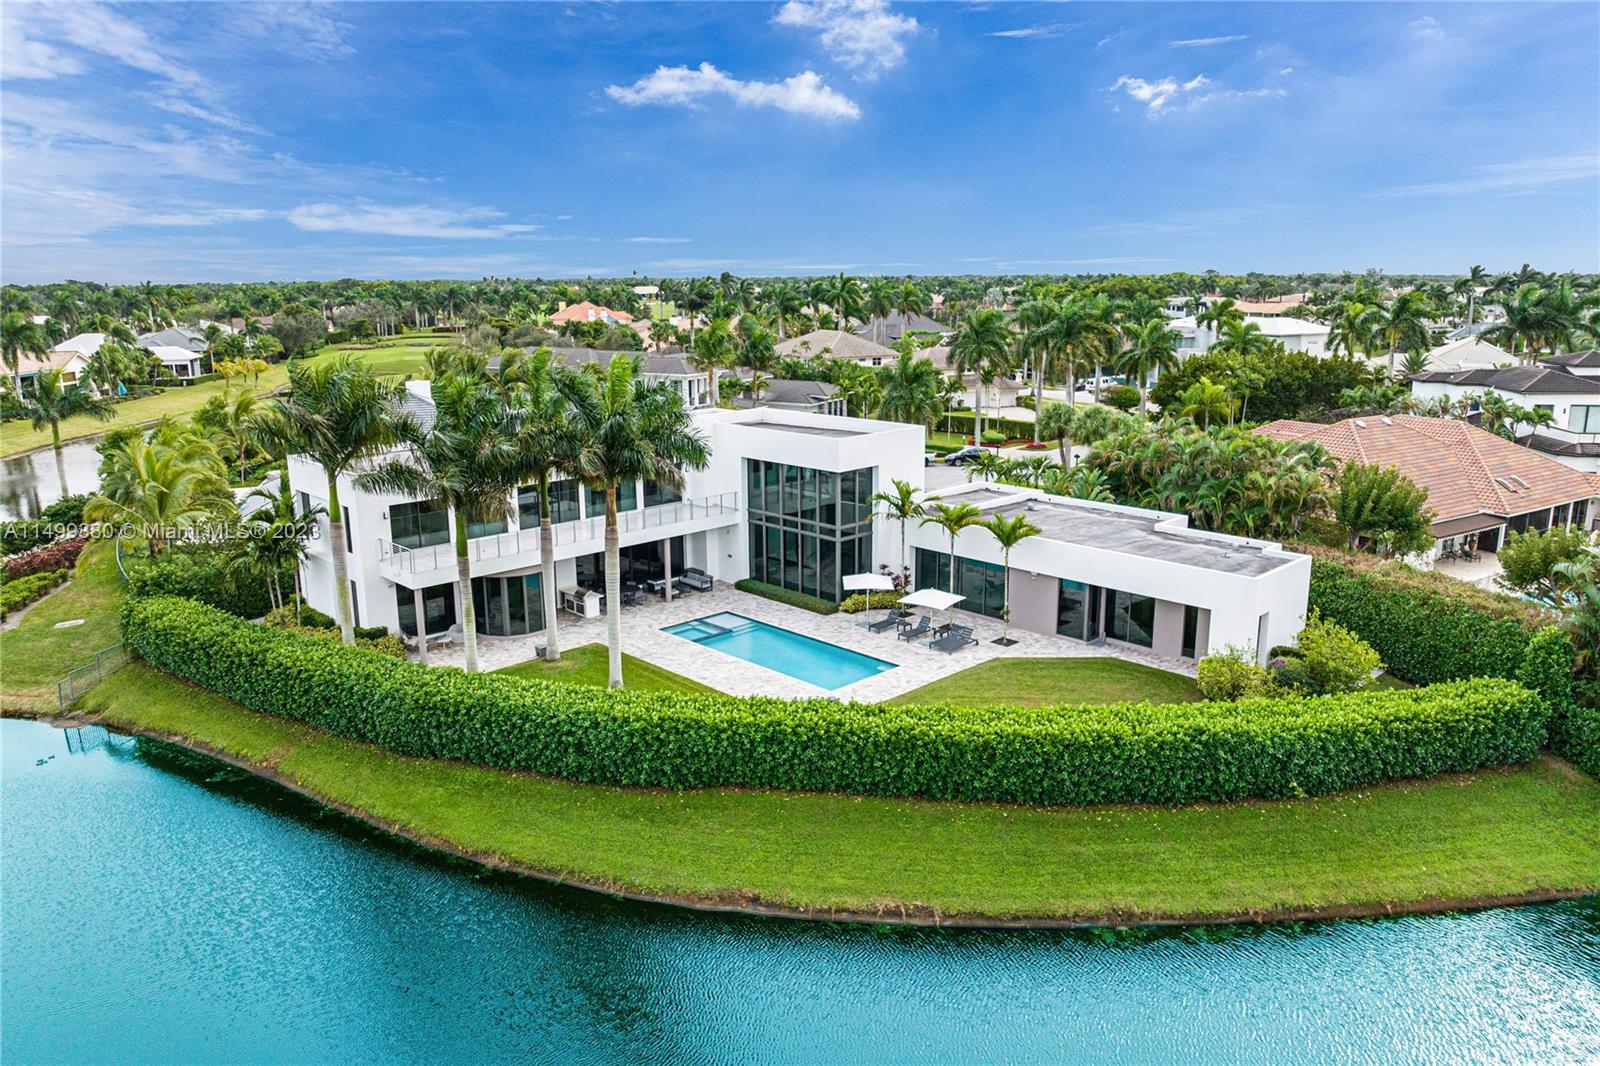 Property for Sale at 7677 Stonehaven Ln Ln, Boca Raton, Broward County, Florida - Bedrooms: 5 
Bathrooms: 8  - $7,450,000